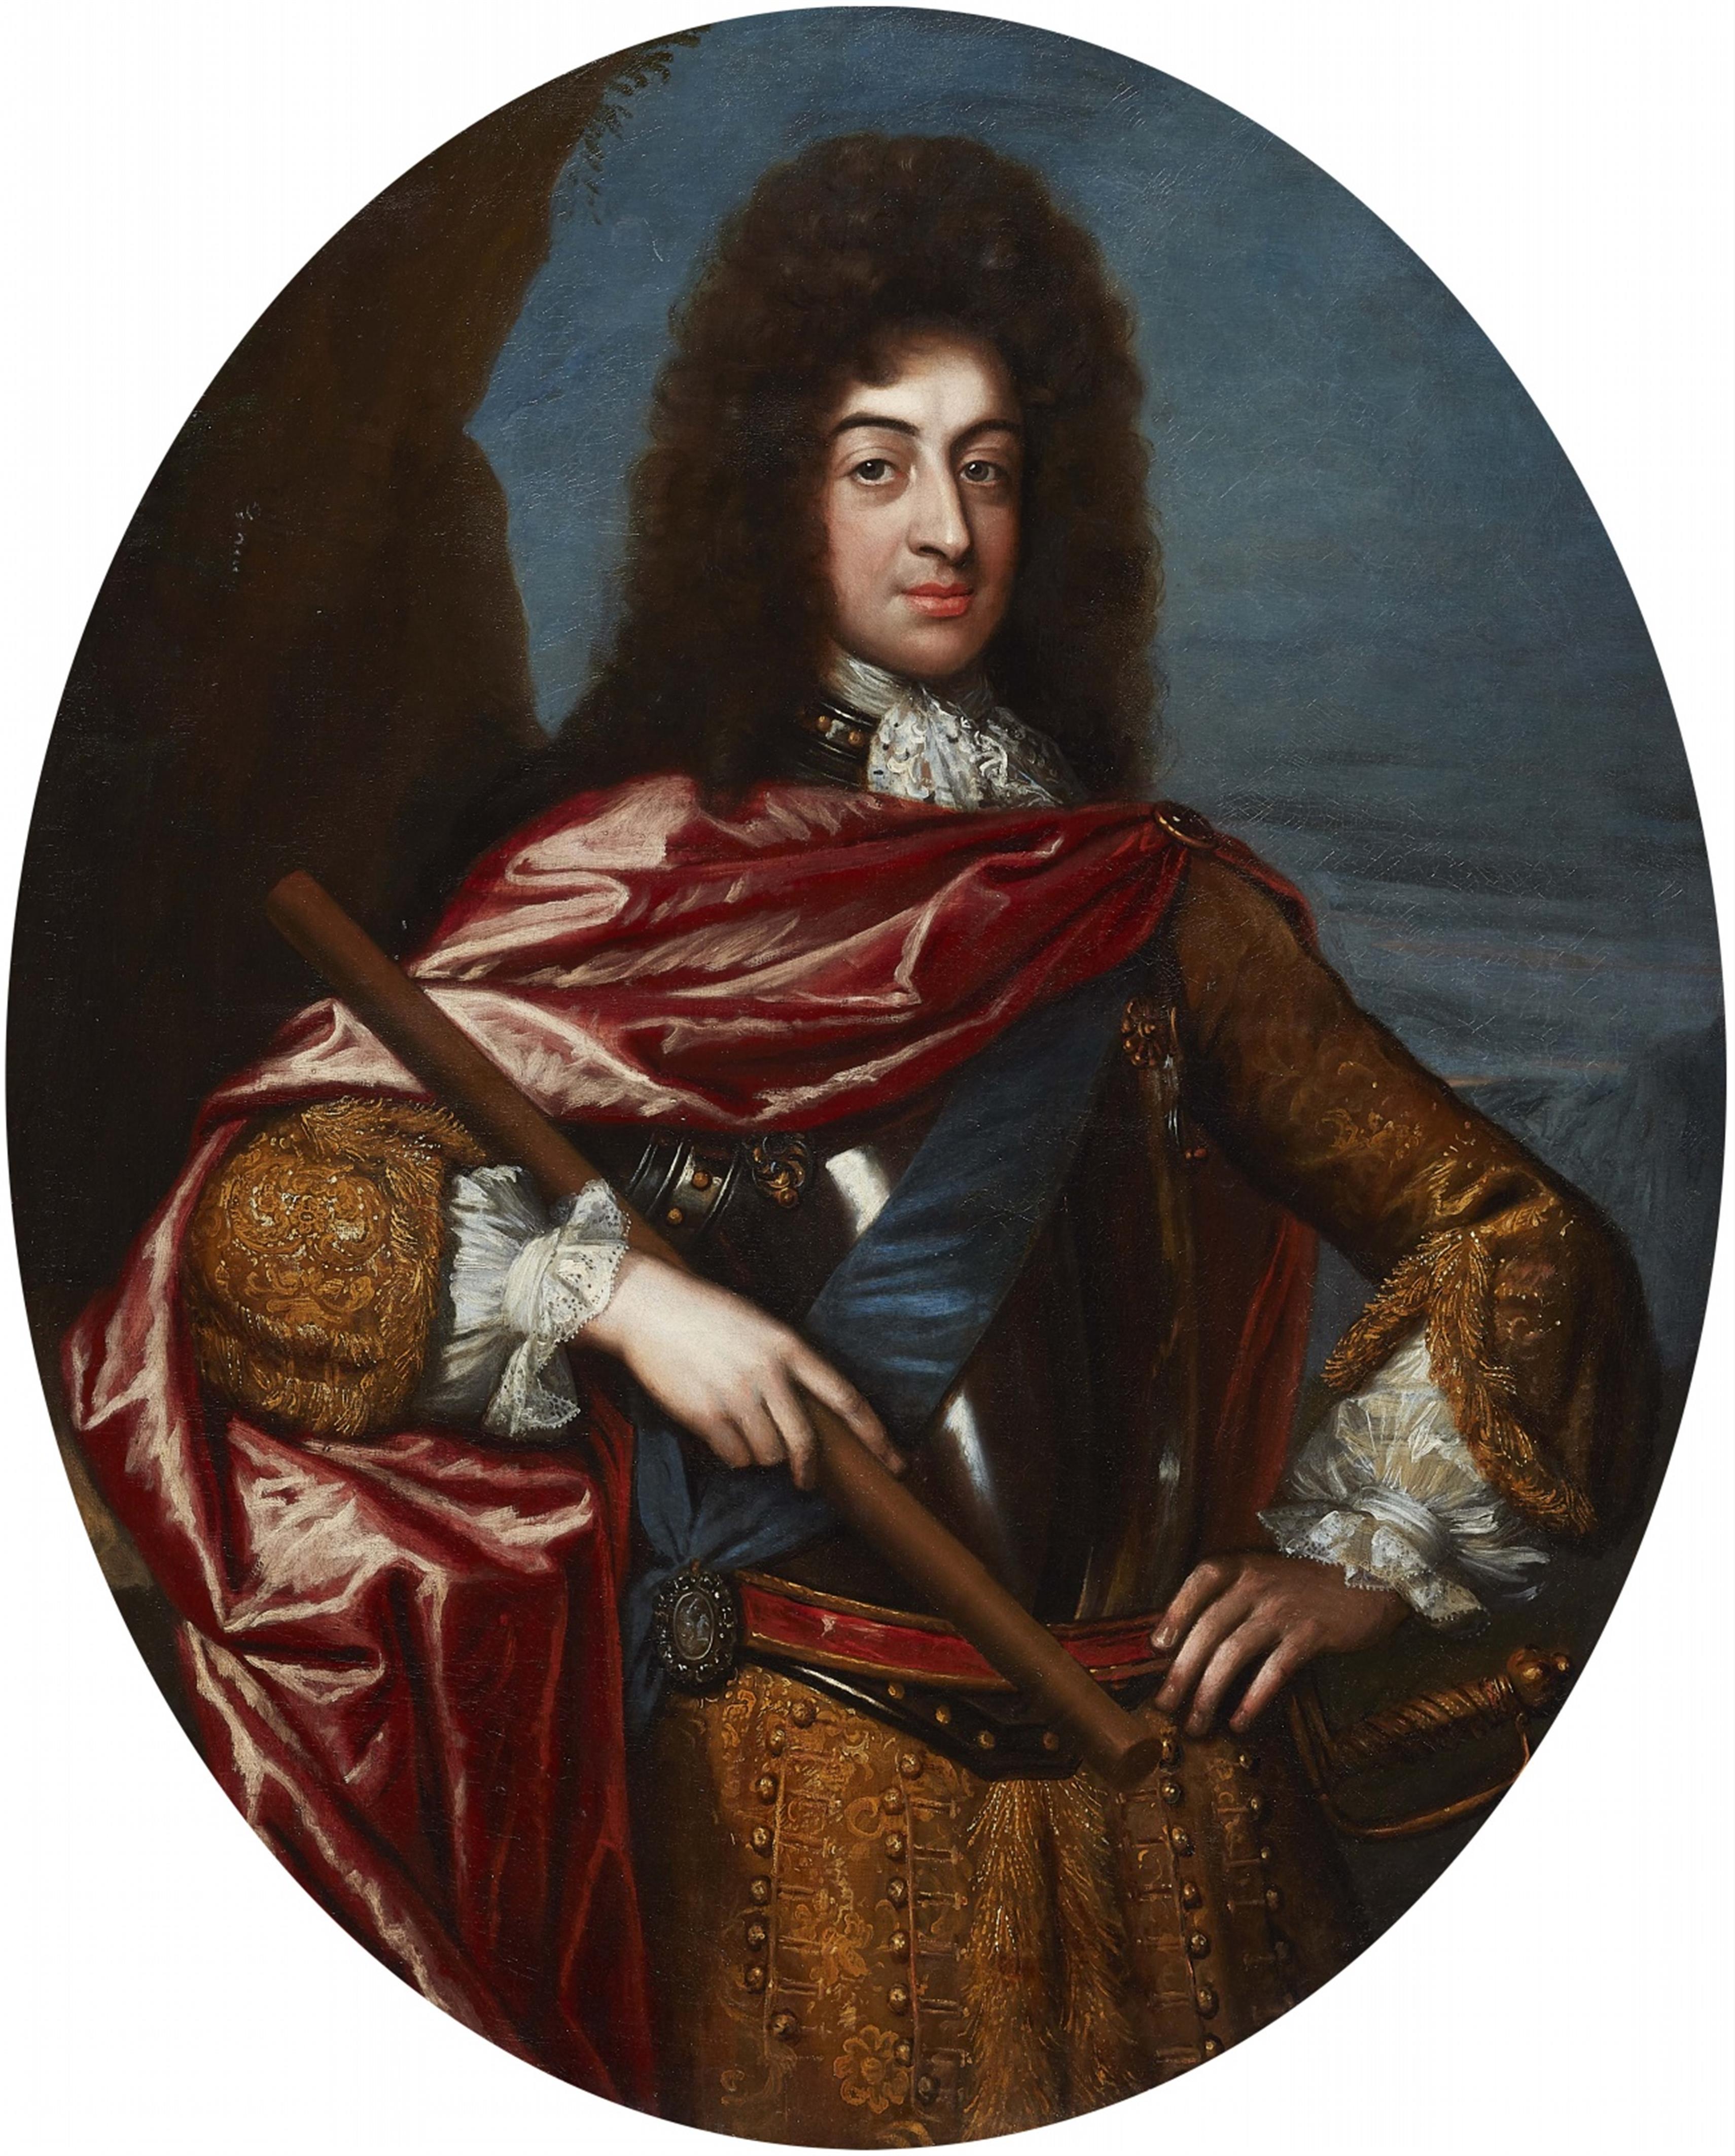 David Klöcker von Ehrenstrahl, attributed to - Portrait of King Karl XI of Sweden with the Order of the Garter - image-1